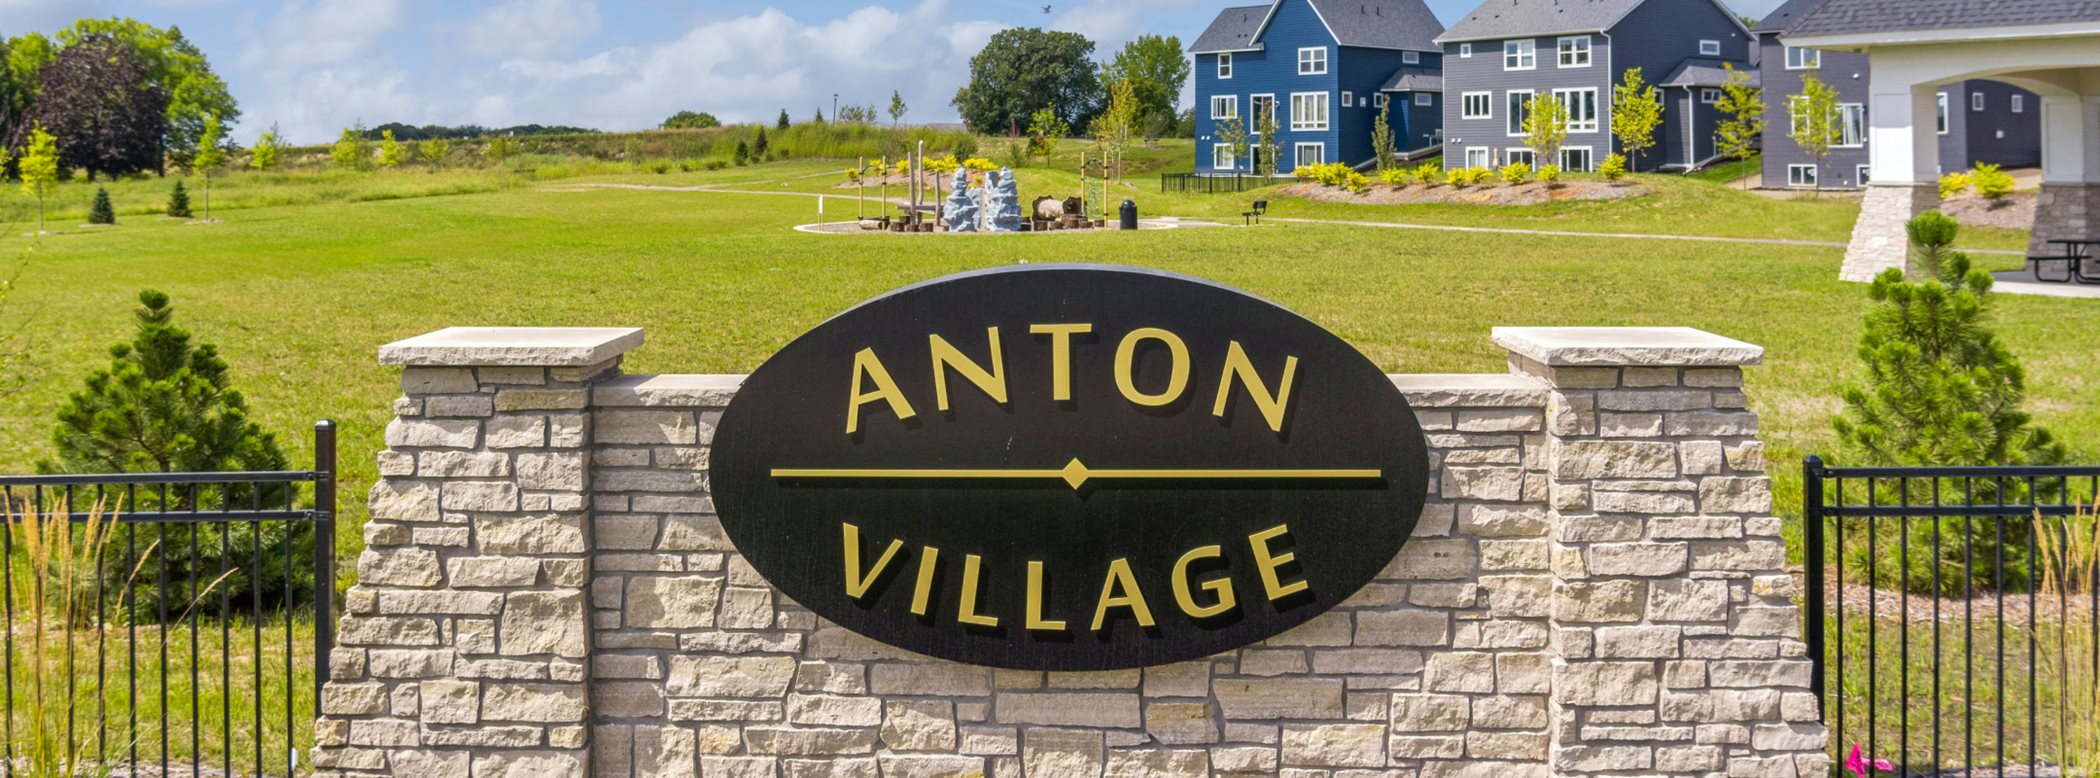 Anton Village Aerial